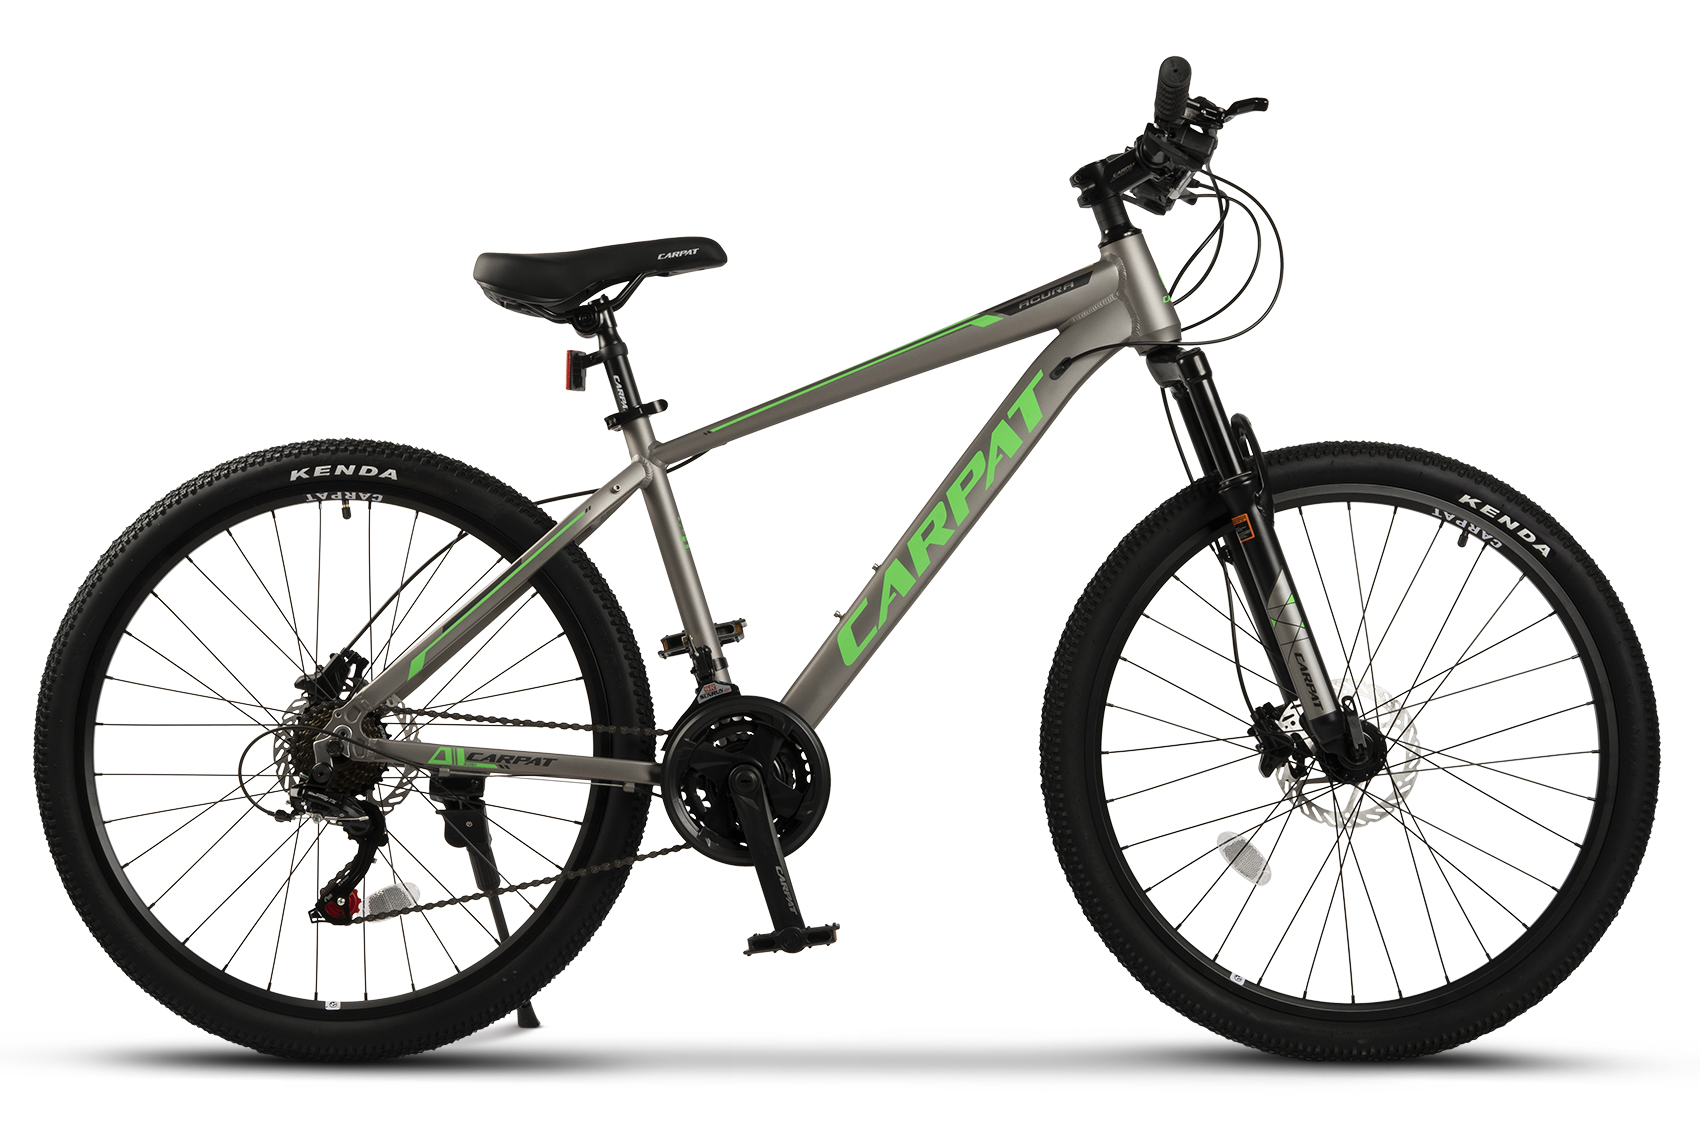 BICICLETE HIDRAULICE - Bicicleta MTB Hidraulica Carpat Acura C2699H 26", Gri/Negru/Verde, https:carpatsport.ro